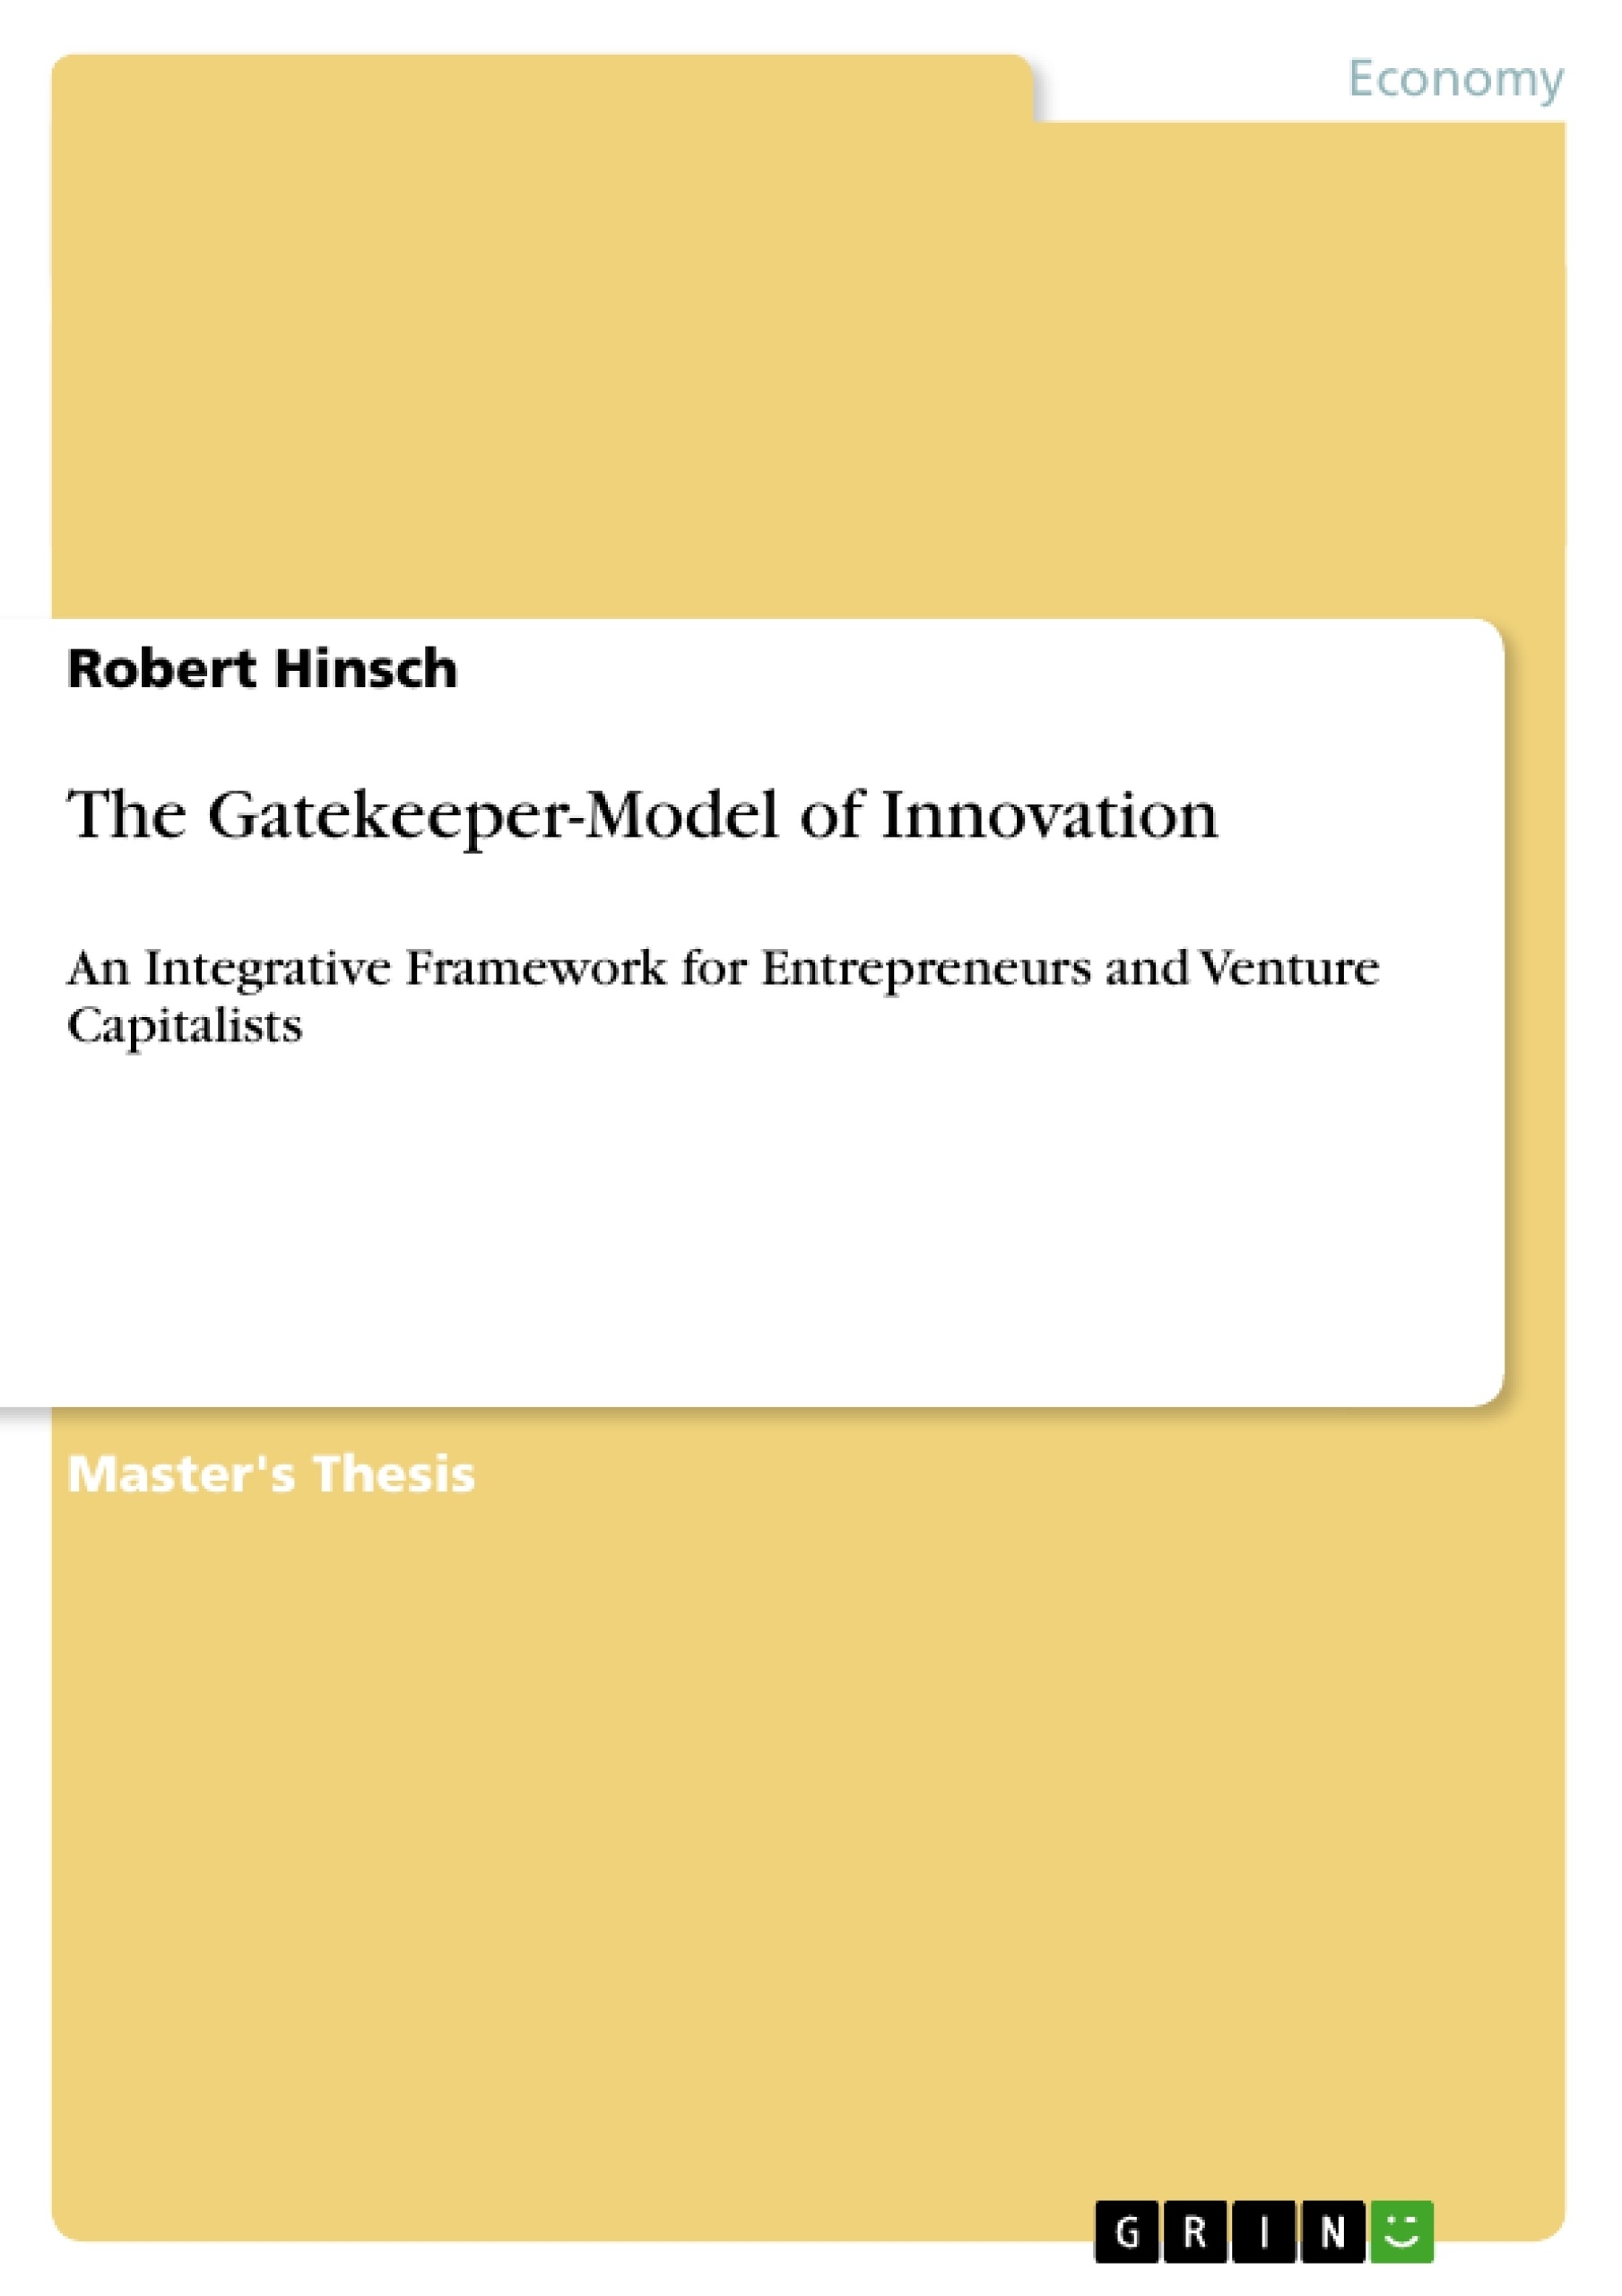 Title: The Gatekeeper-Model of Innovation